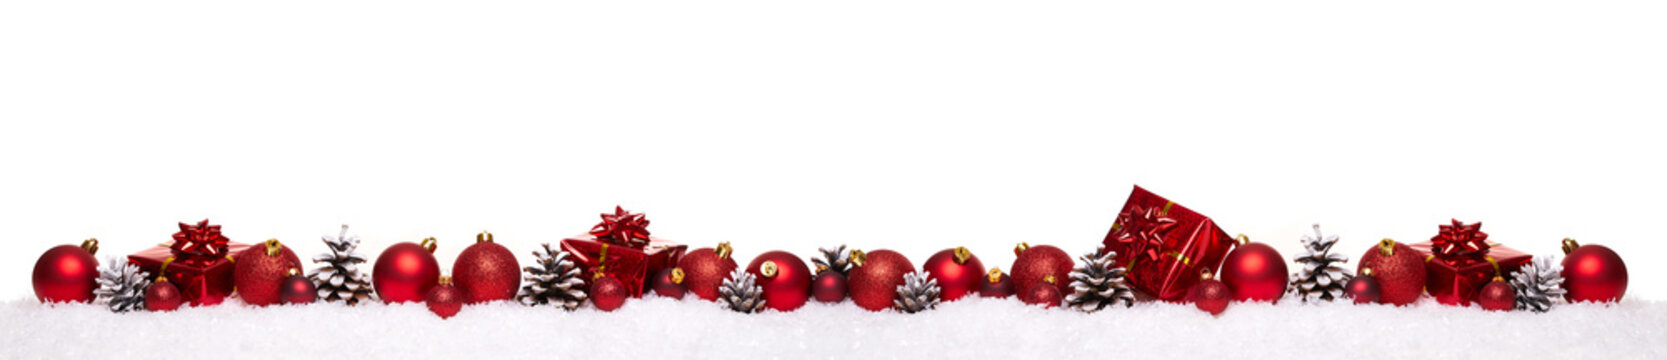 518,012 BEST Christmas Border IMAGES, STOCK PHOTOS & VECTORS | Adobe Stock